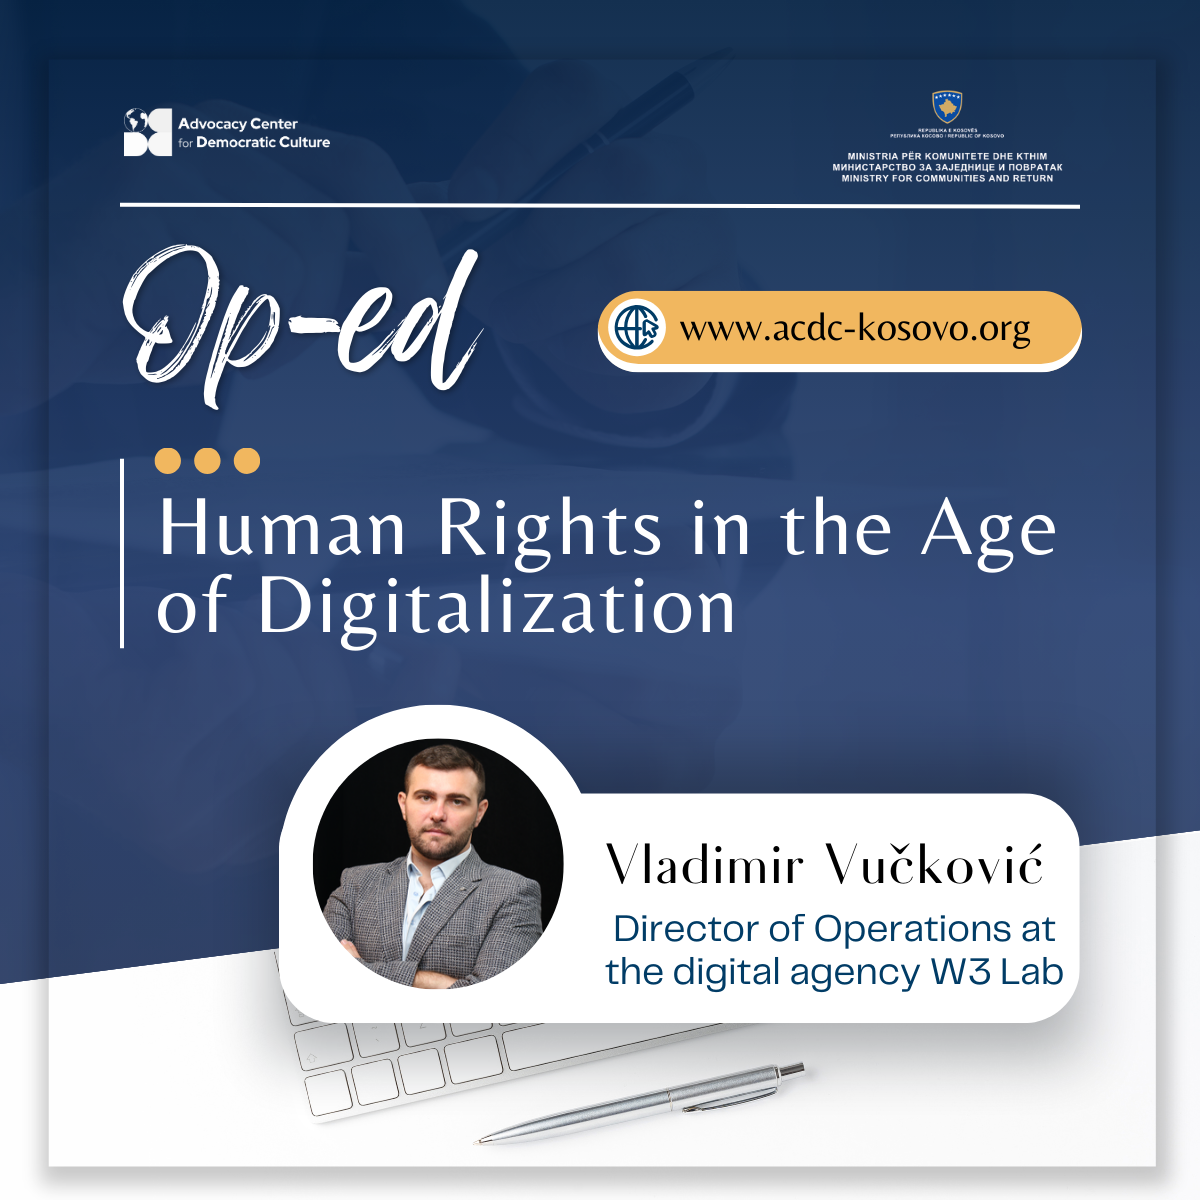 op-ed-human-rights-in-the-era-of-digitalization